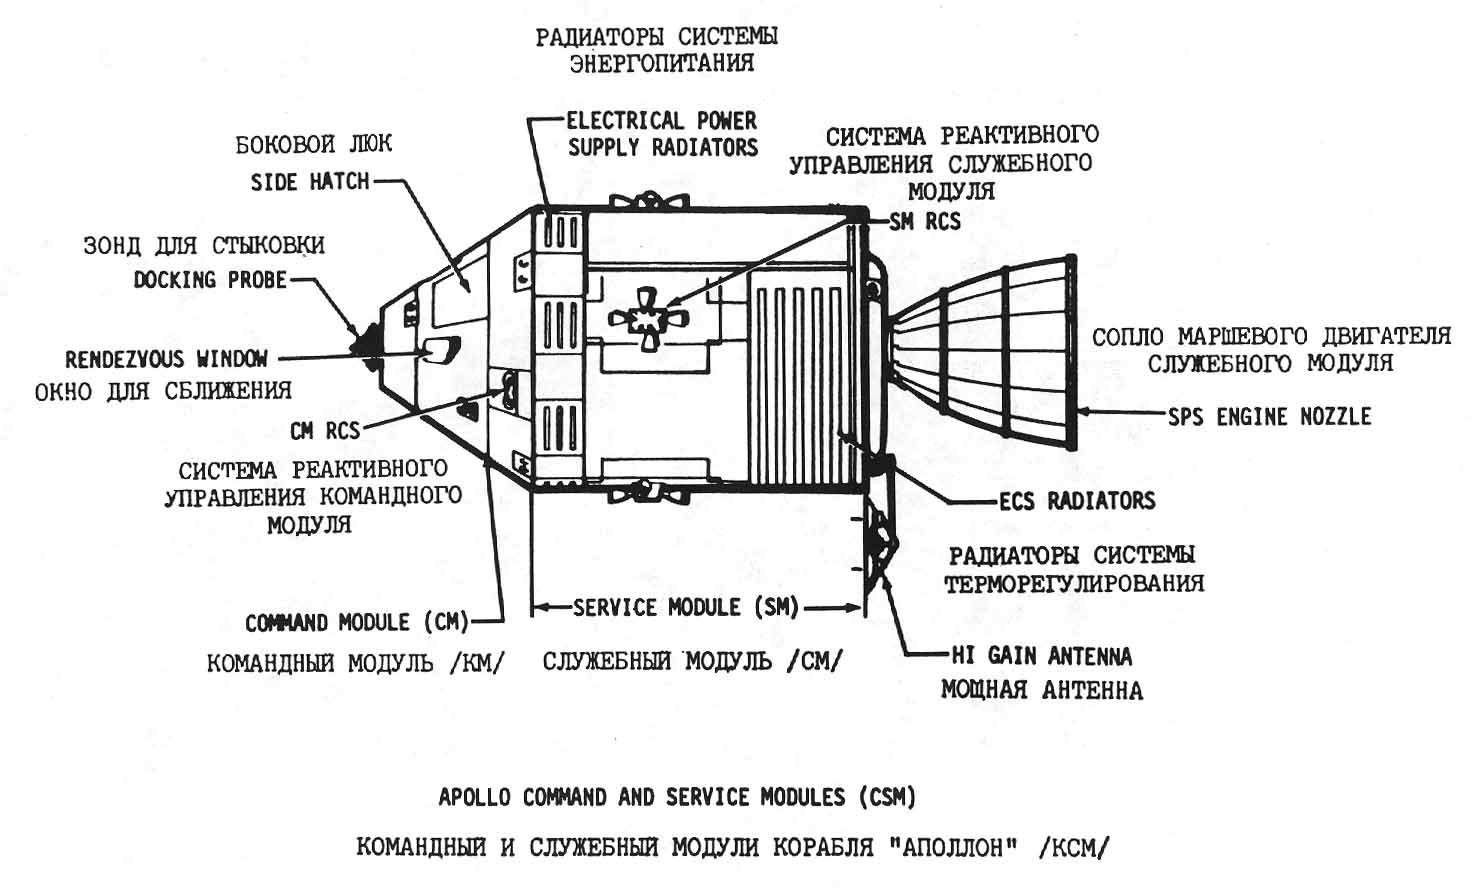 component diagram of the Apollo Command and Service Modules